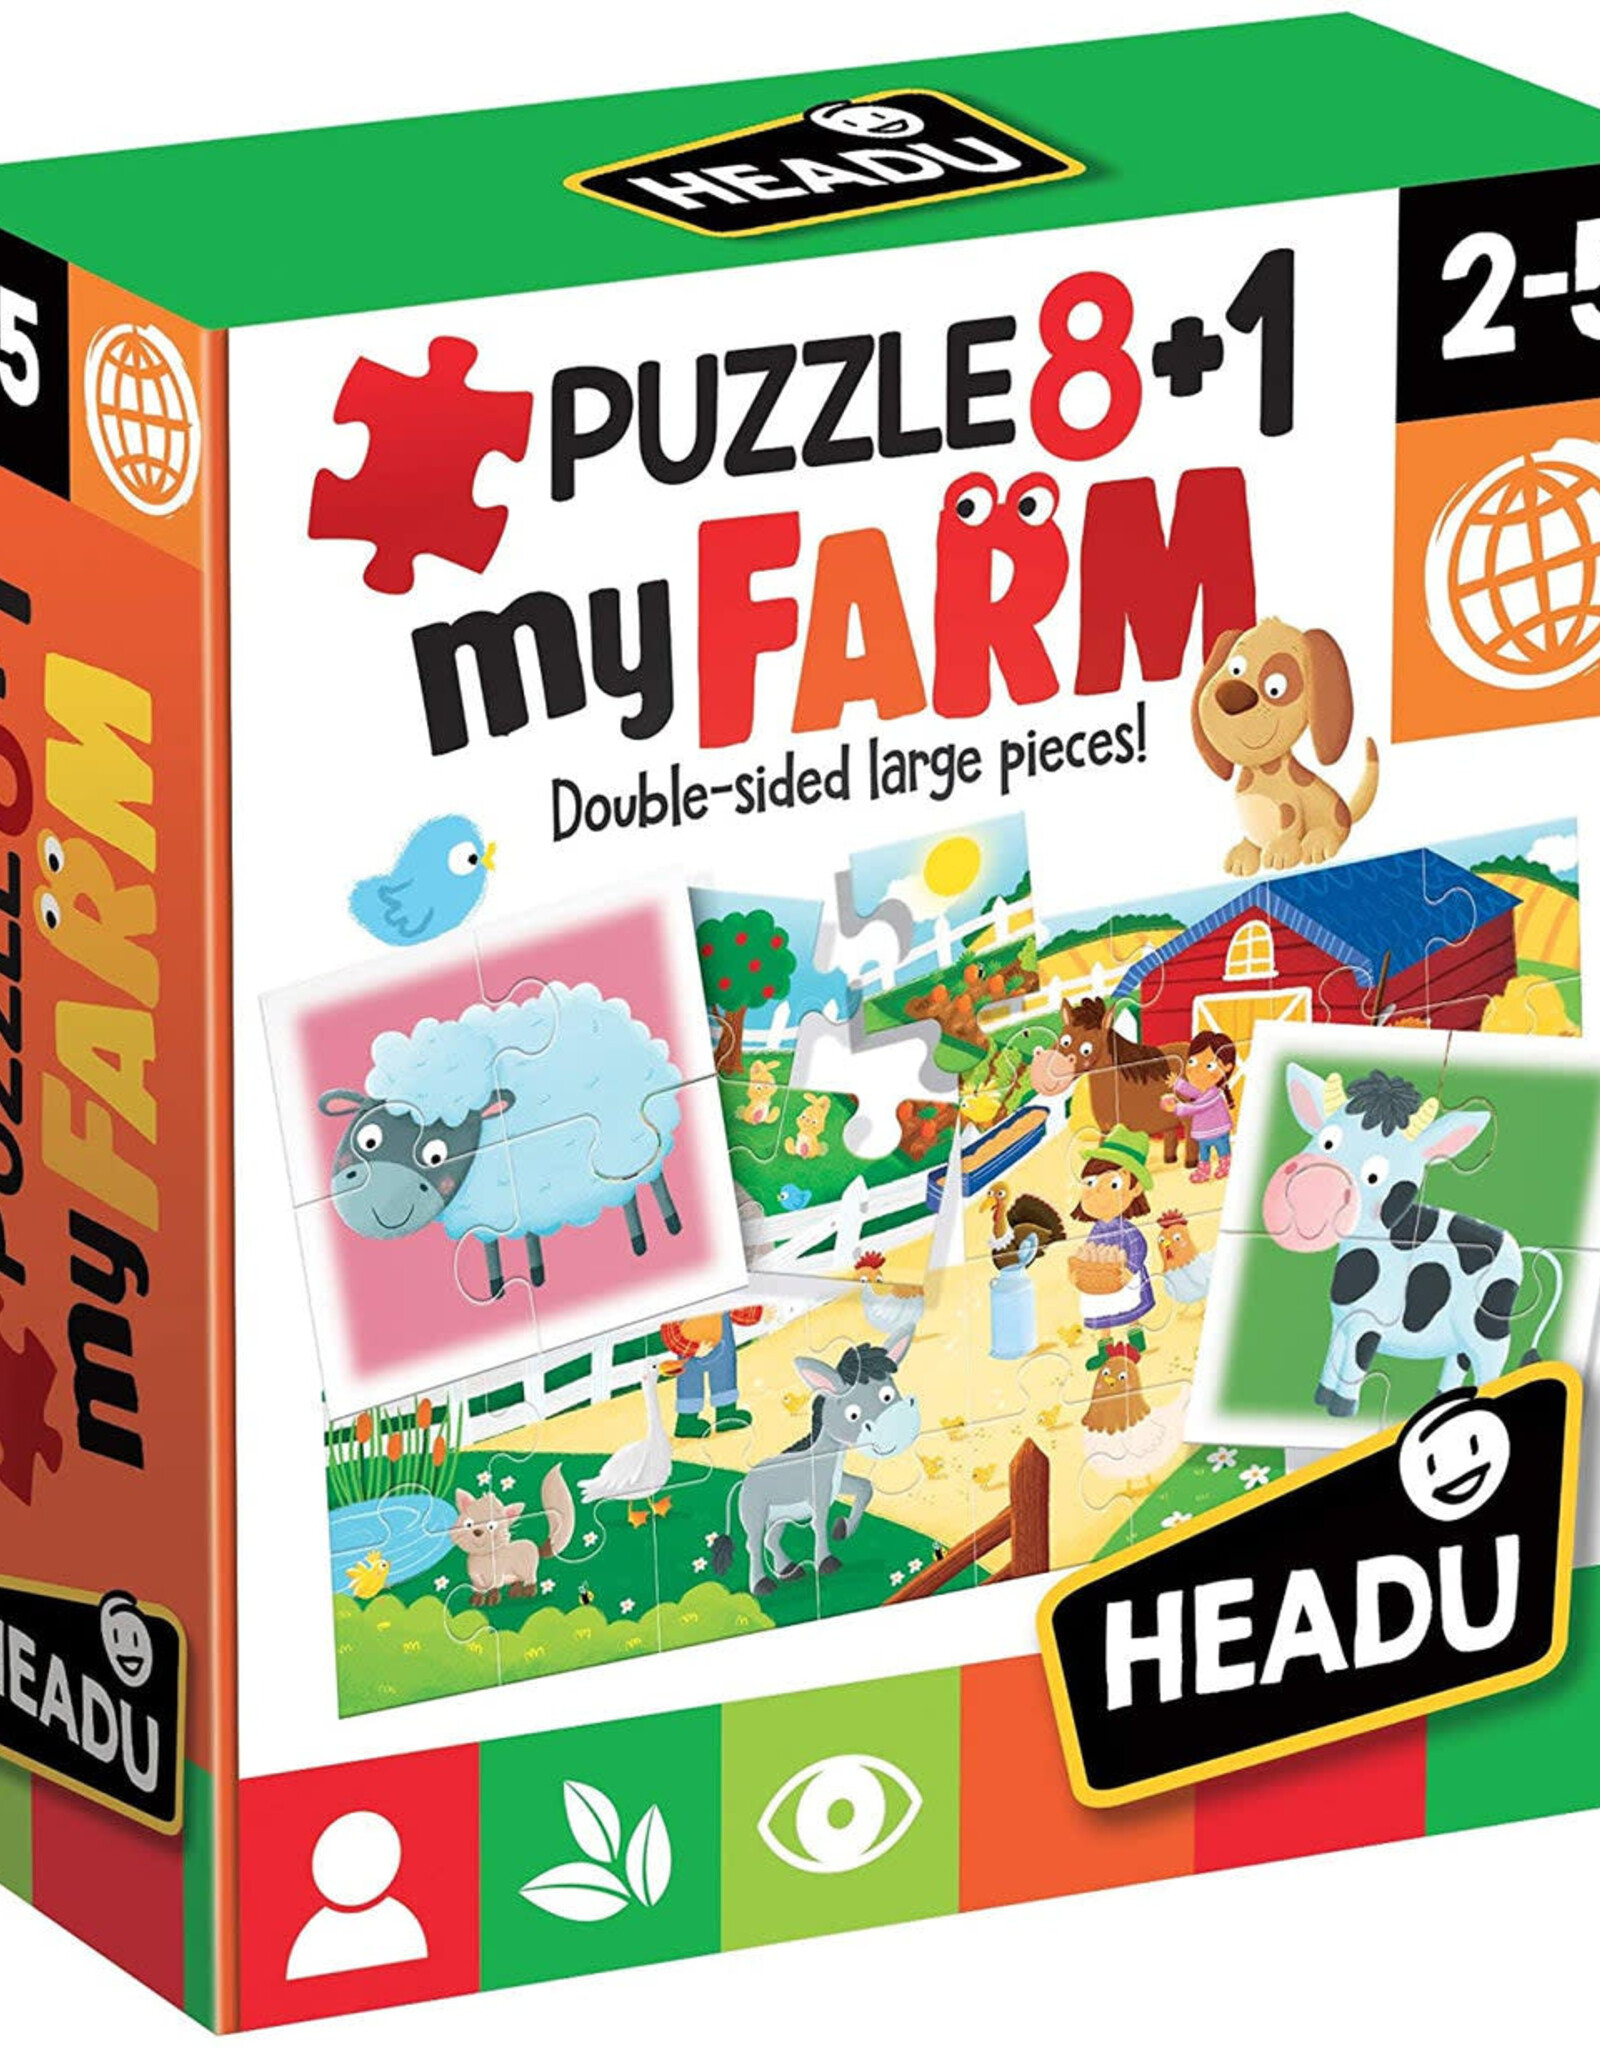 Puzzle 8 + 1 Farm